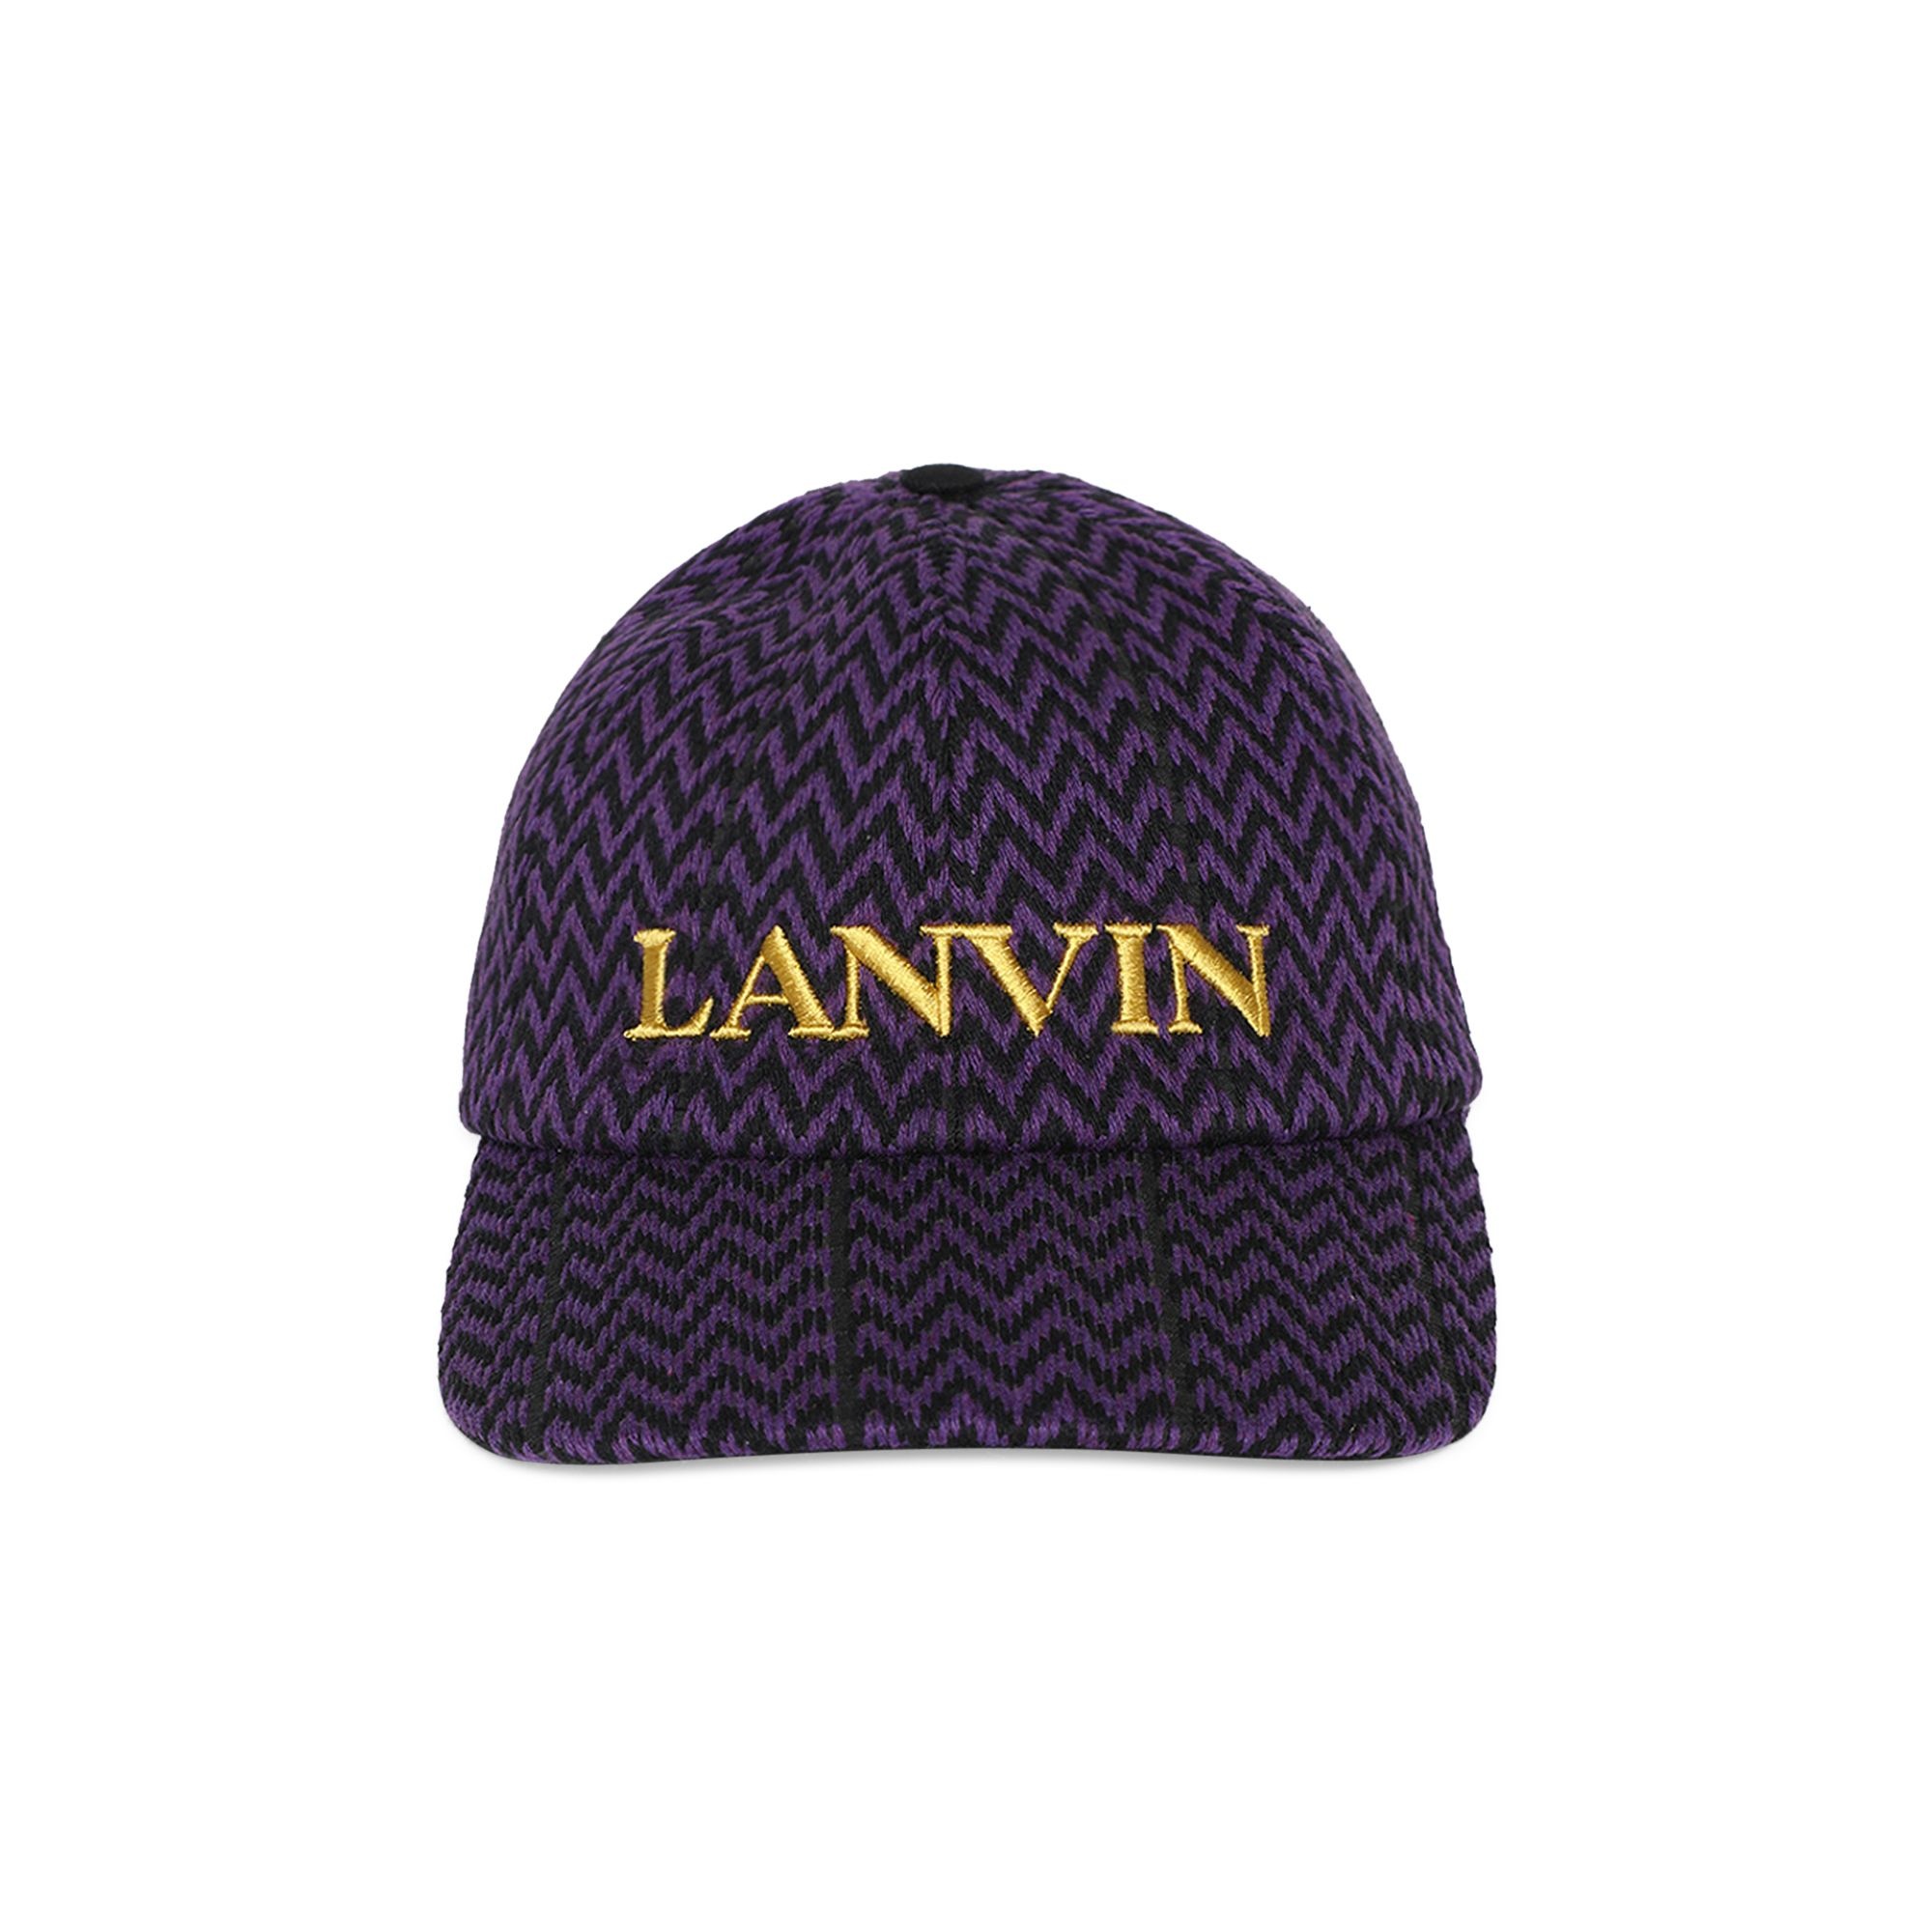 Lanvin Curb Baseball Cap 'Black/Purple Reign' - 1